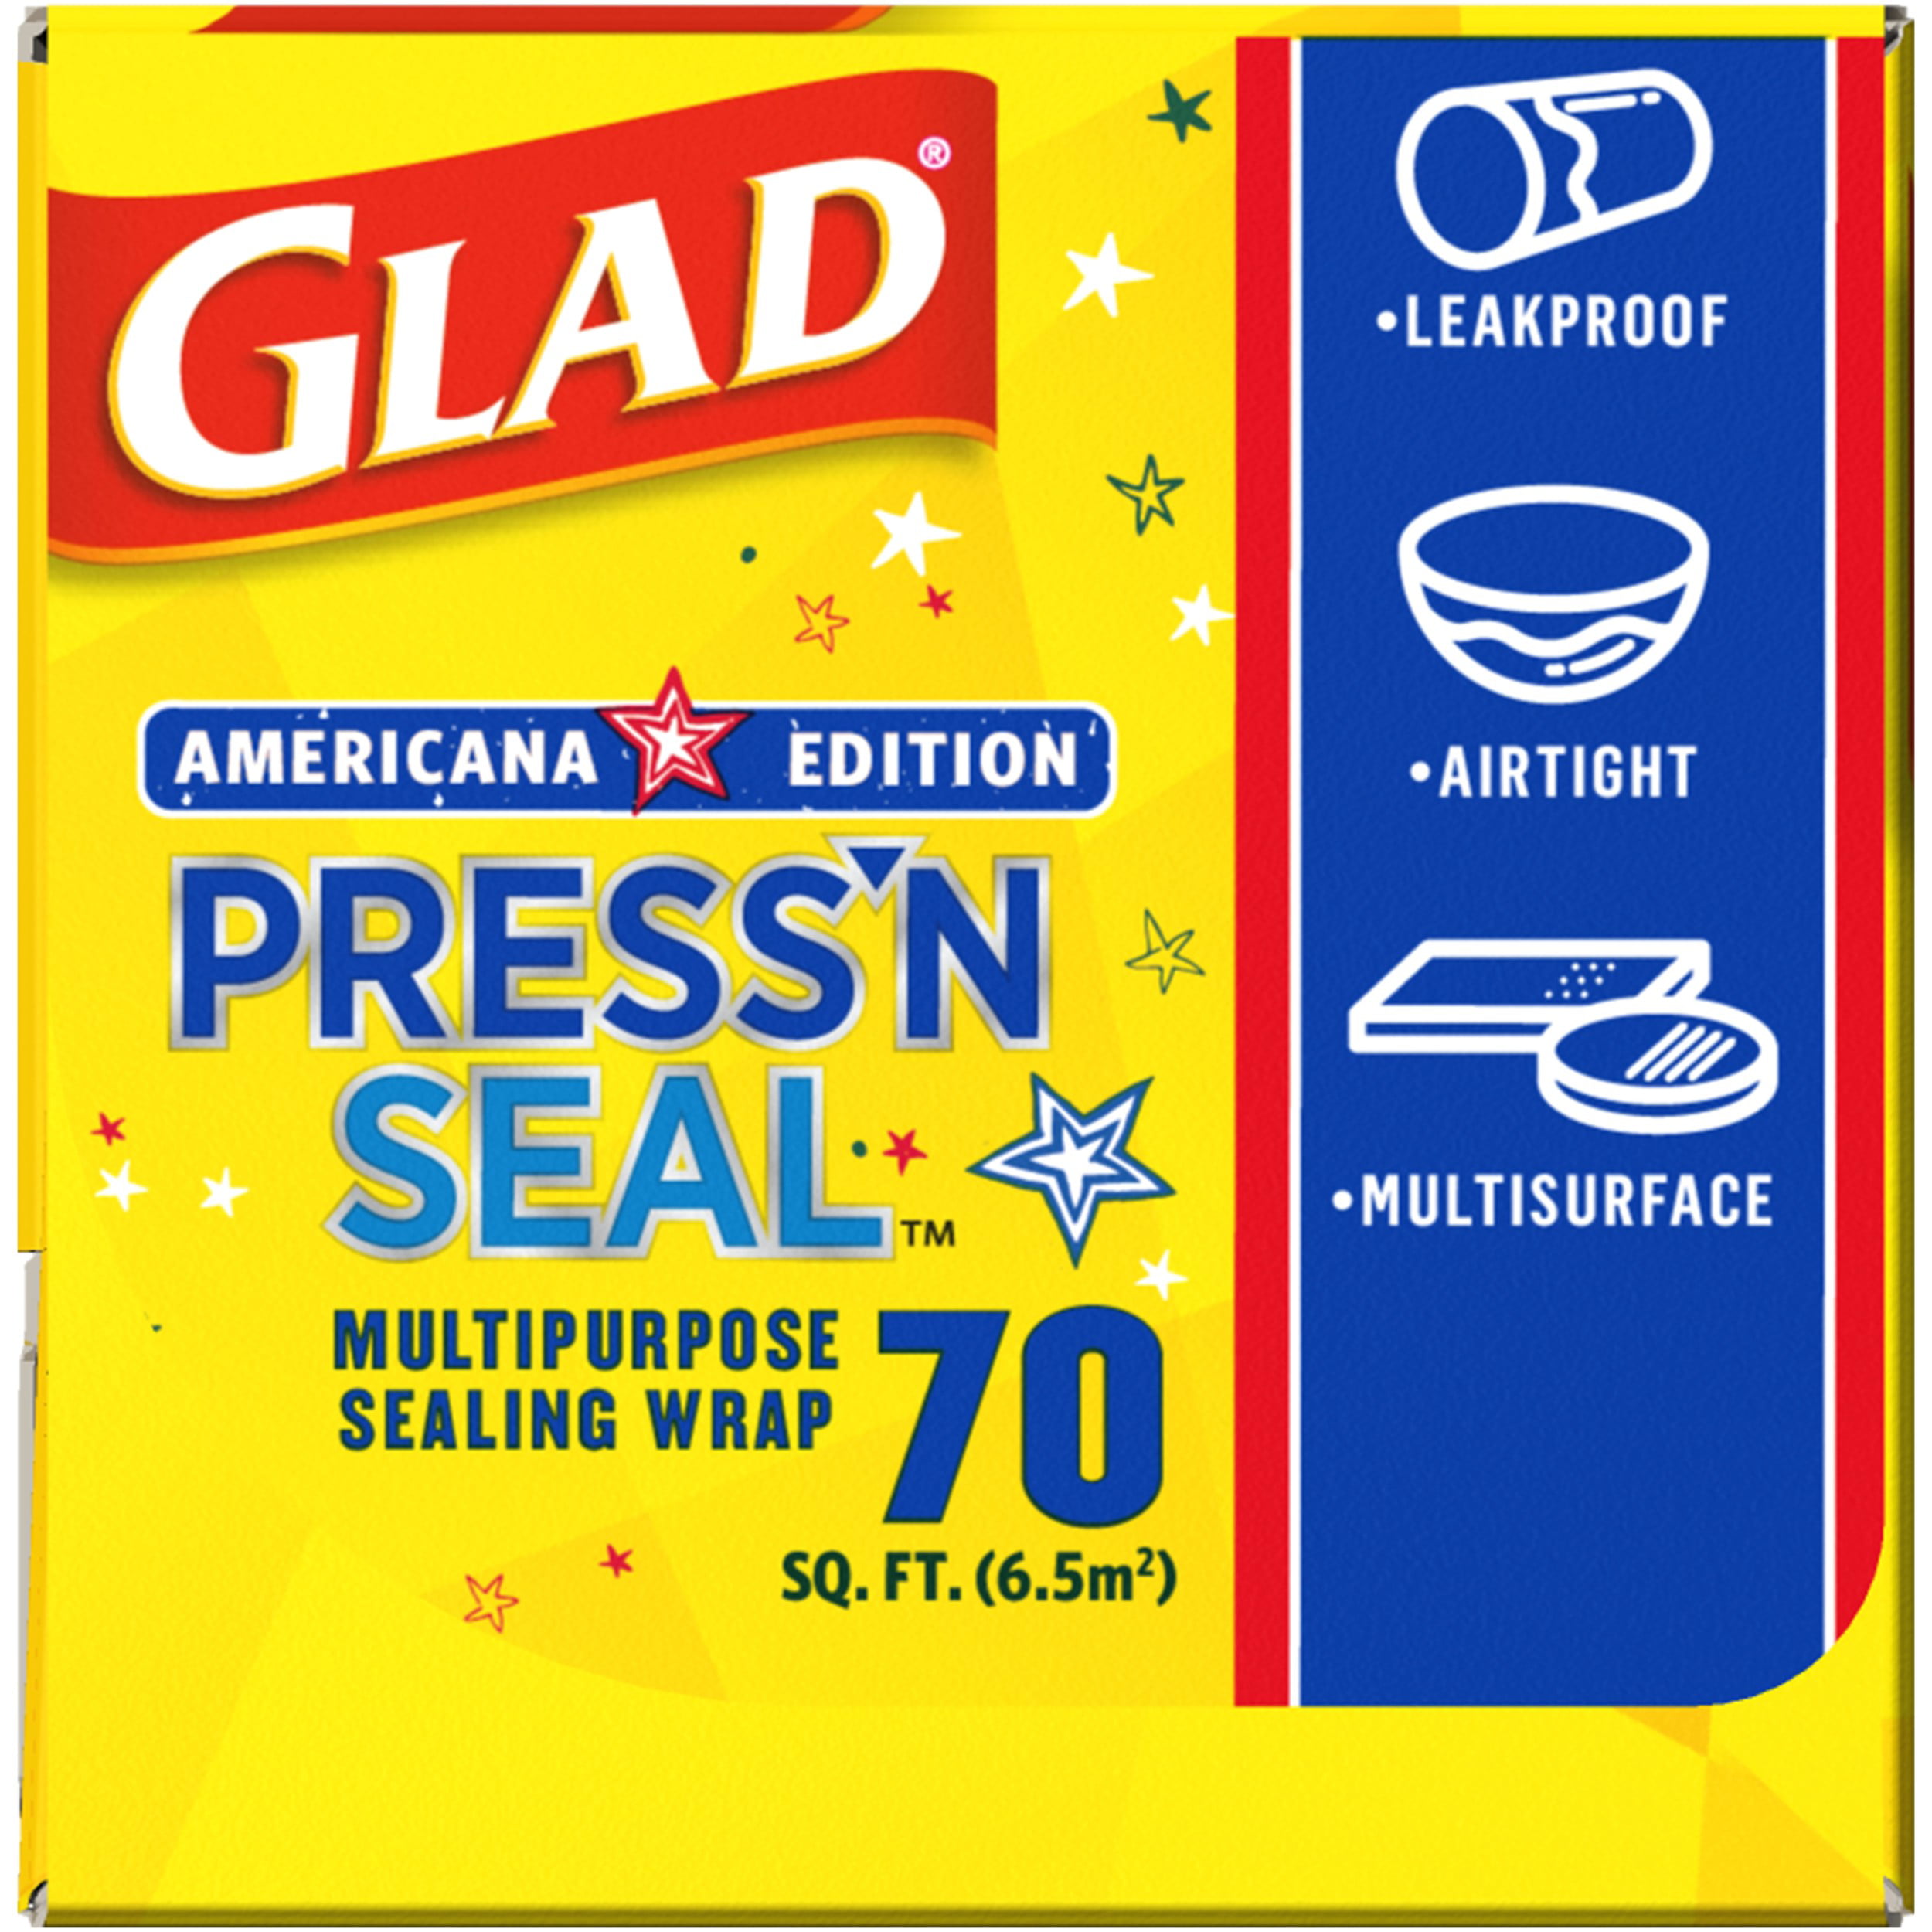 Glad Press'n Seal Food Plastic Wrap, 70 Square Foot Roll, 12 Rolls/Carton